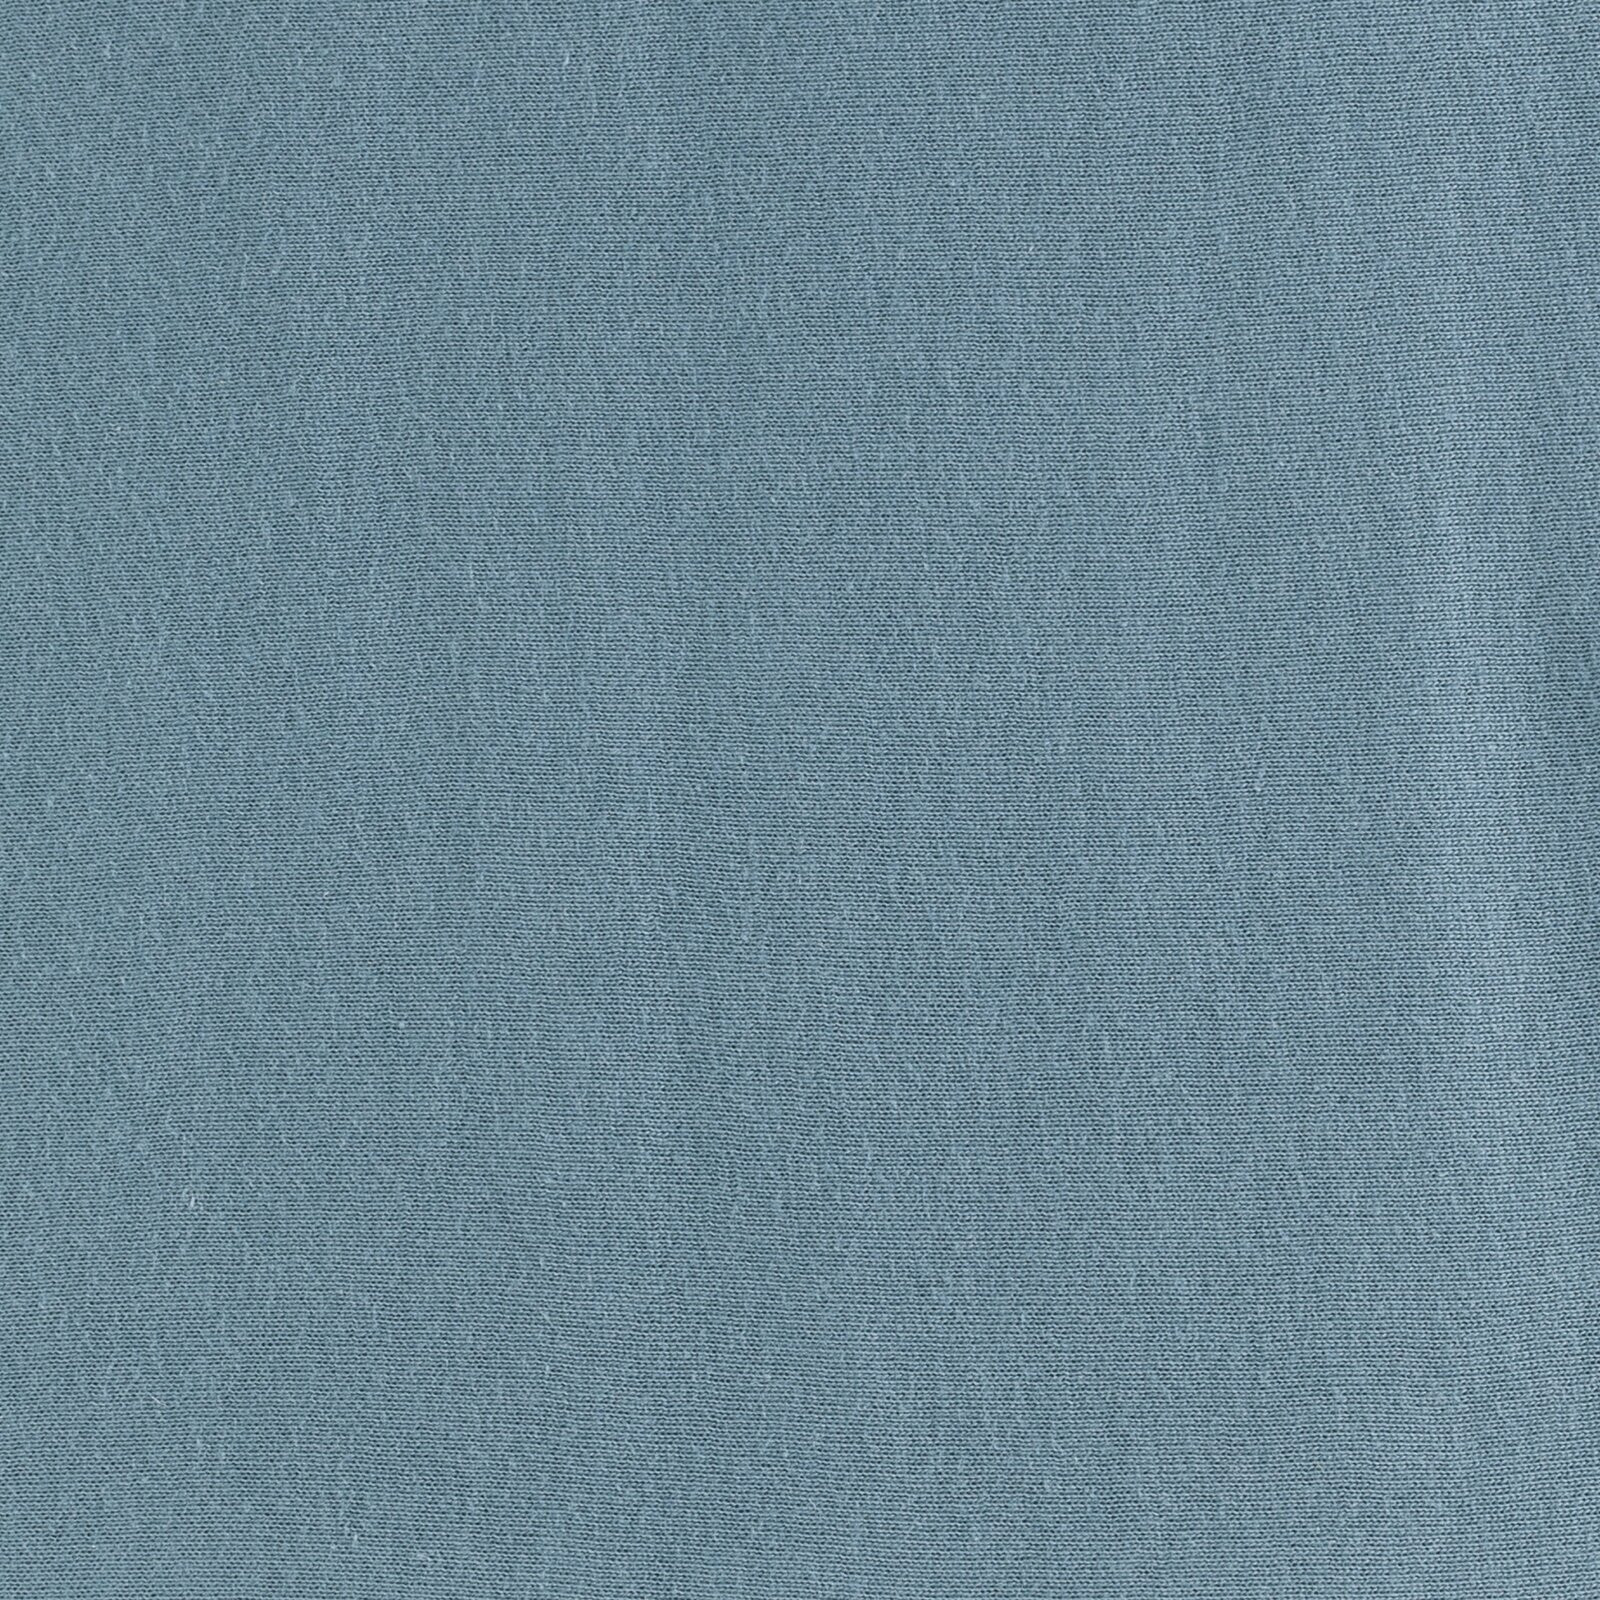 Plachta s gumičkou JERSEY D91 modrá